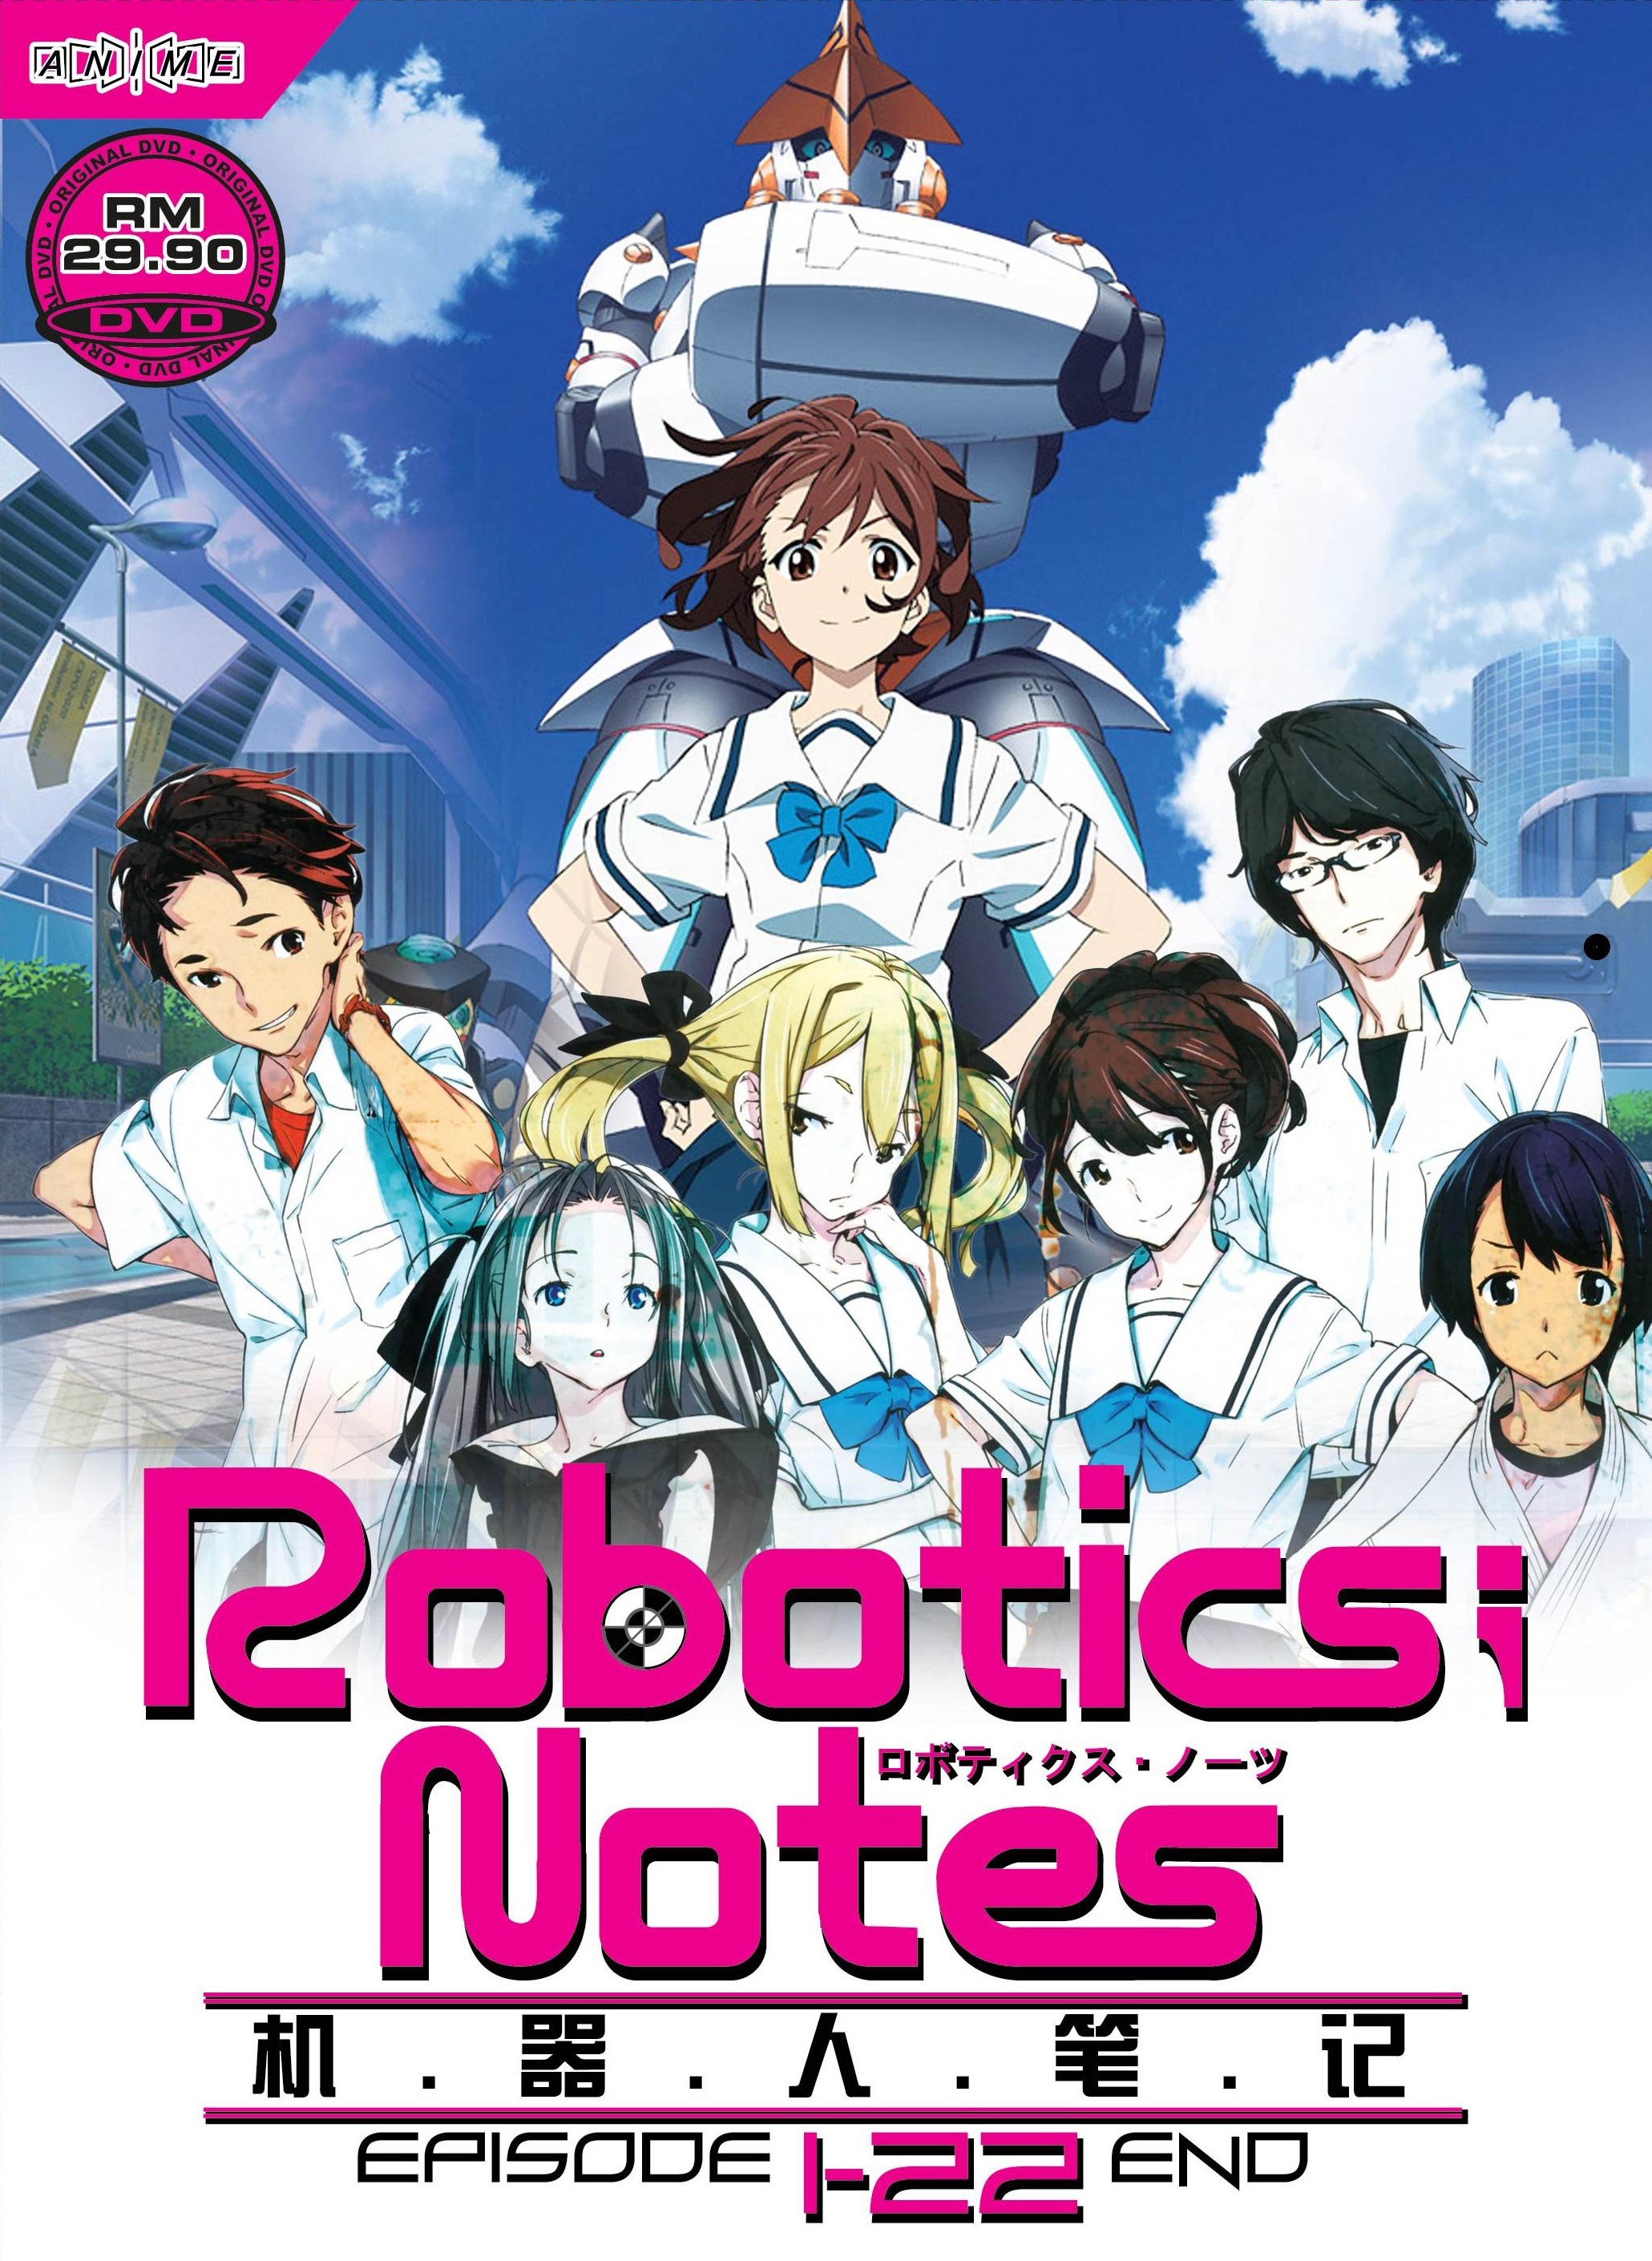 RoboticsNotes Elite  Announcement Trailer  PS4  YouTube